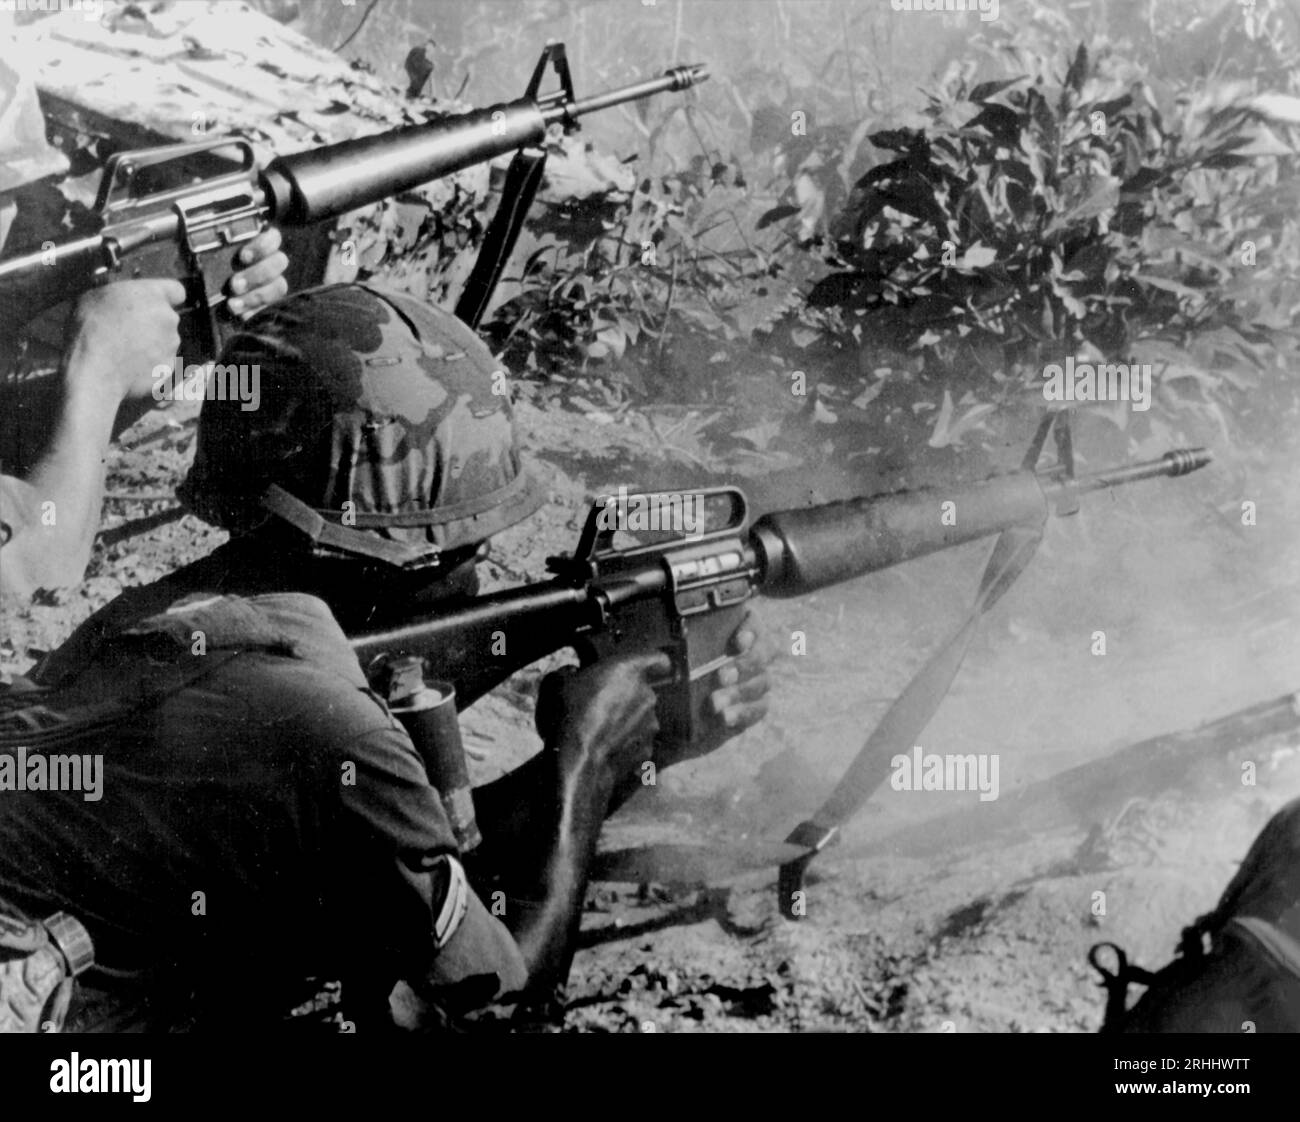 LOC NINH, VIETNAM - October / November 1967 - US Army GIs engage Viet Cong forces near Loc Ninh, close to the Laos border during October and November Stock Photo